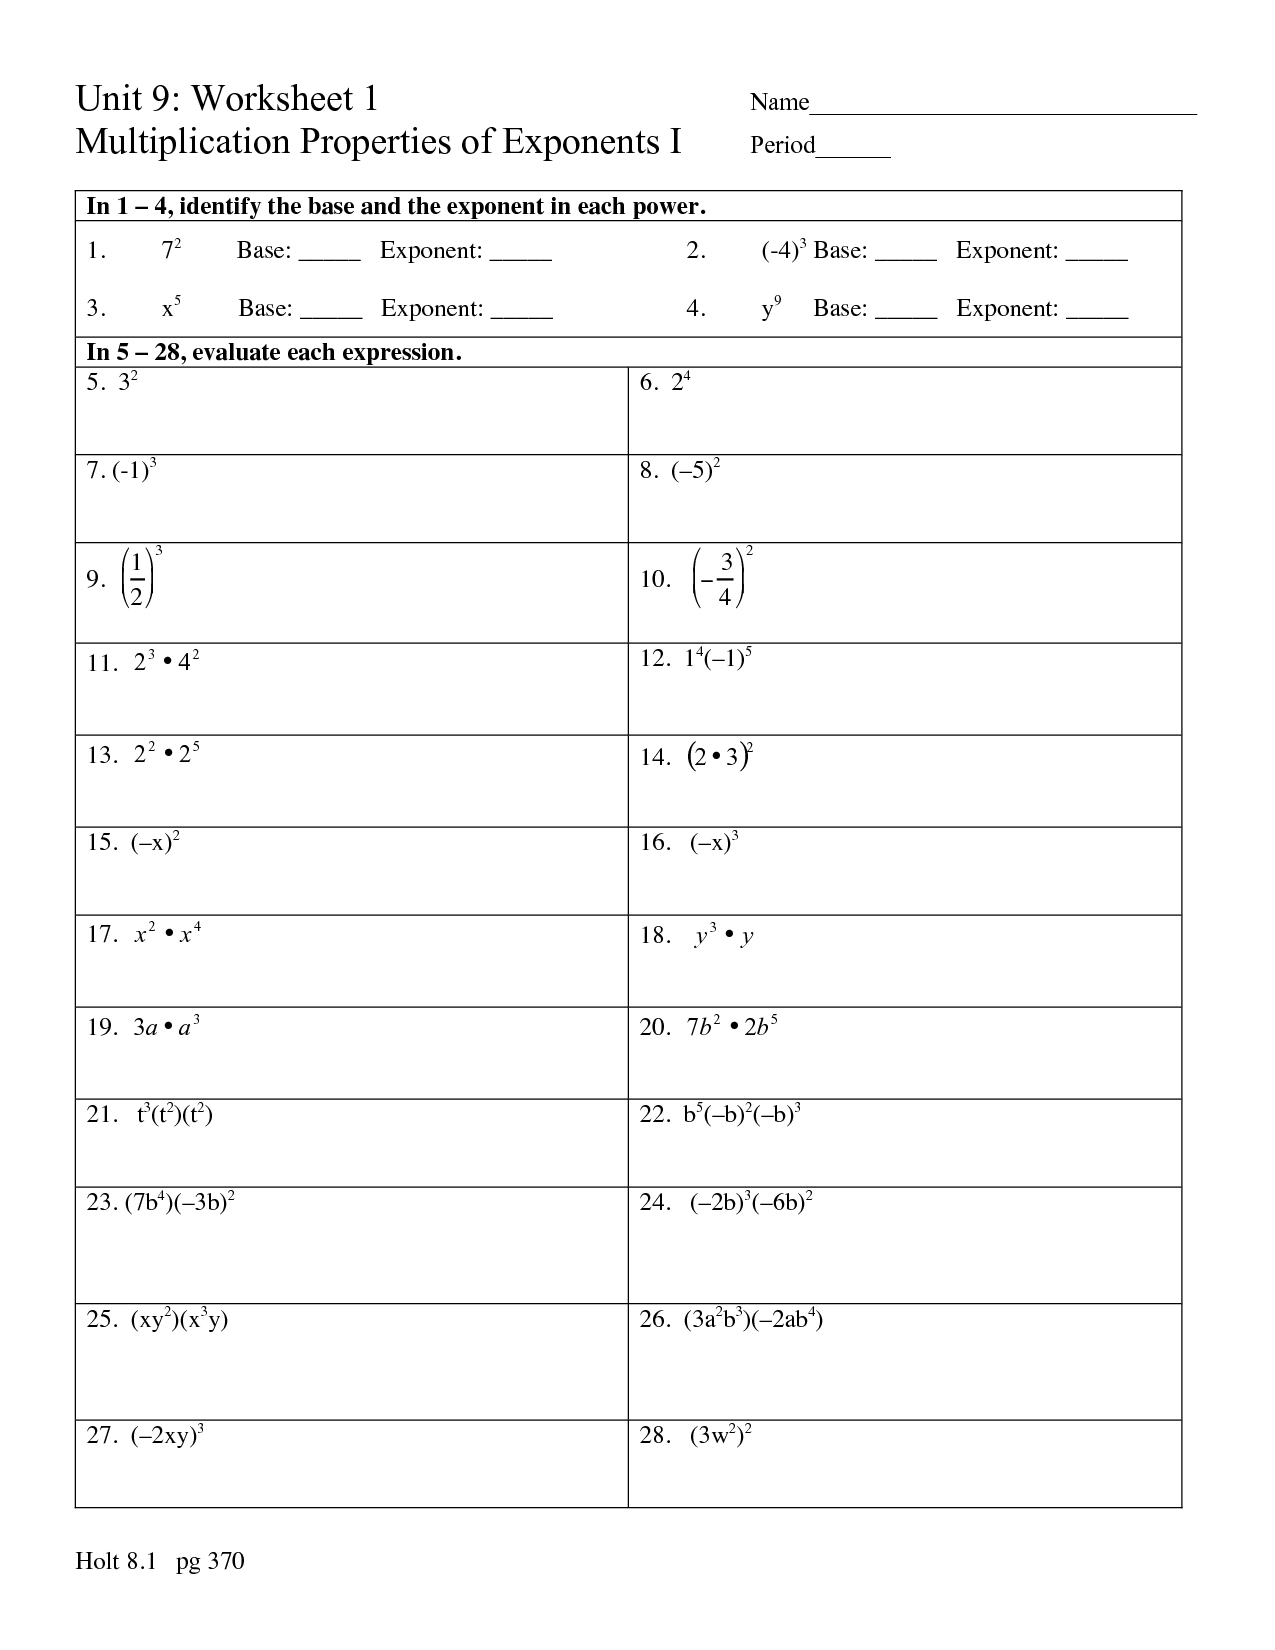 Multiplication Property of Exponents Worksheet